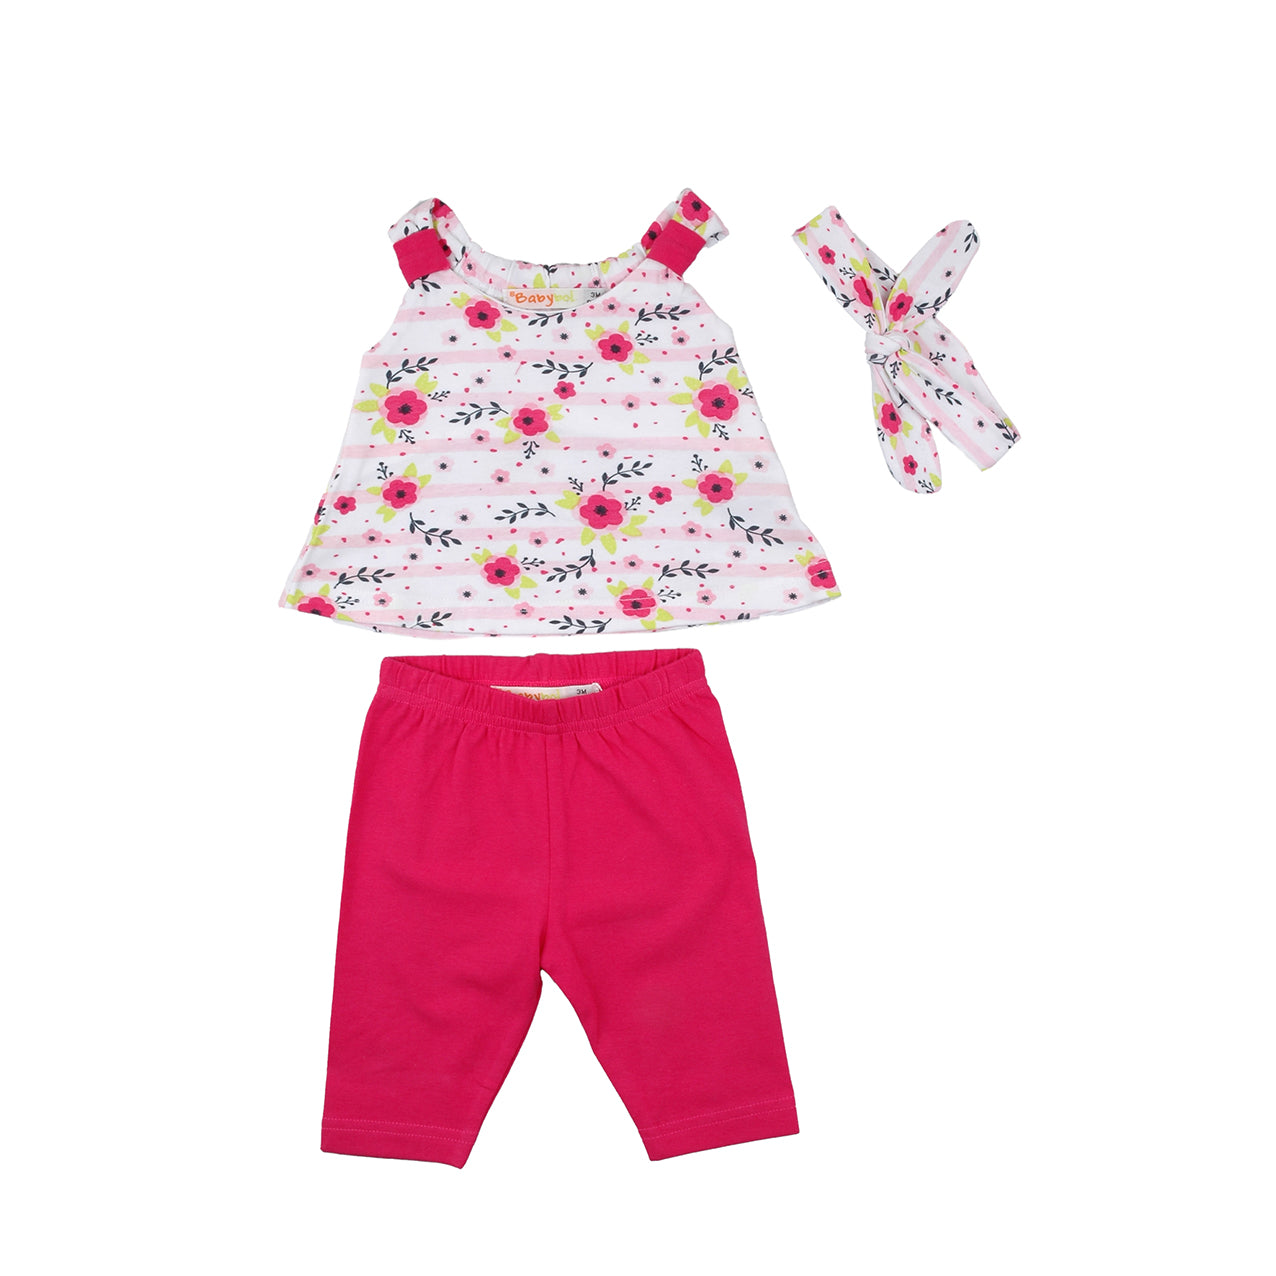 Girls pink leggings set by Spanish brand Babybol - Adora Childrenswear